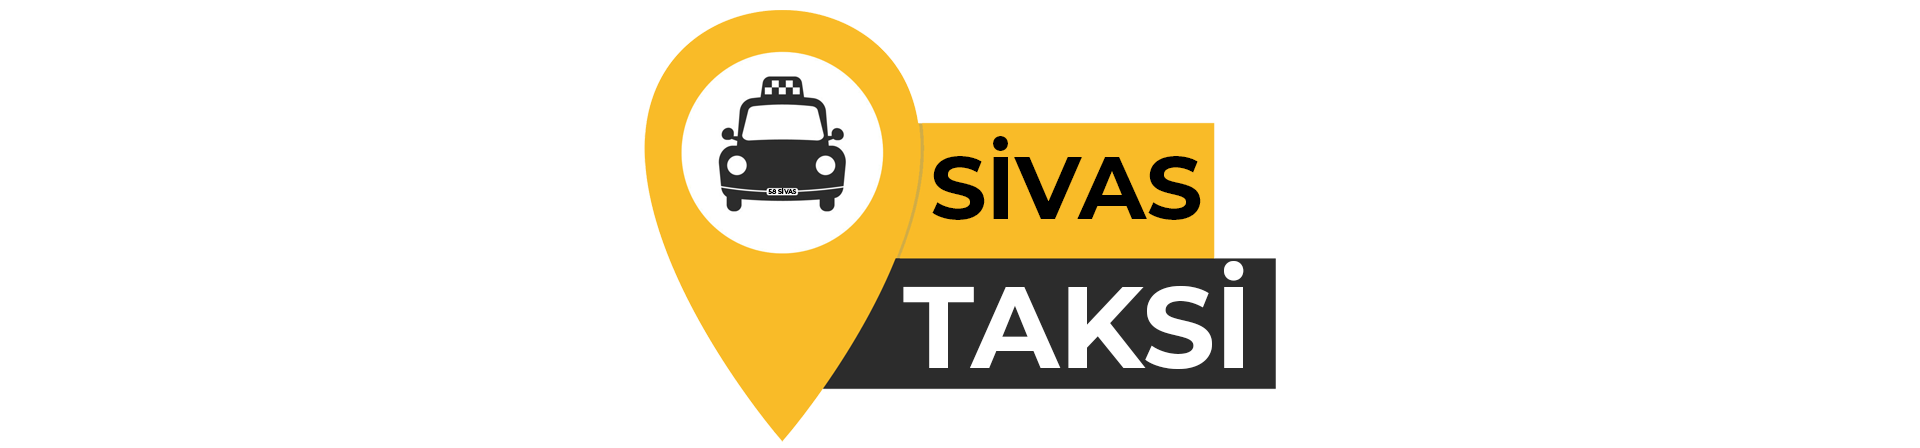 sivas taksi logo